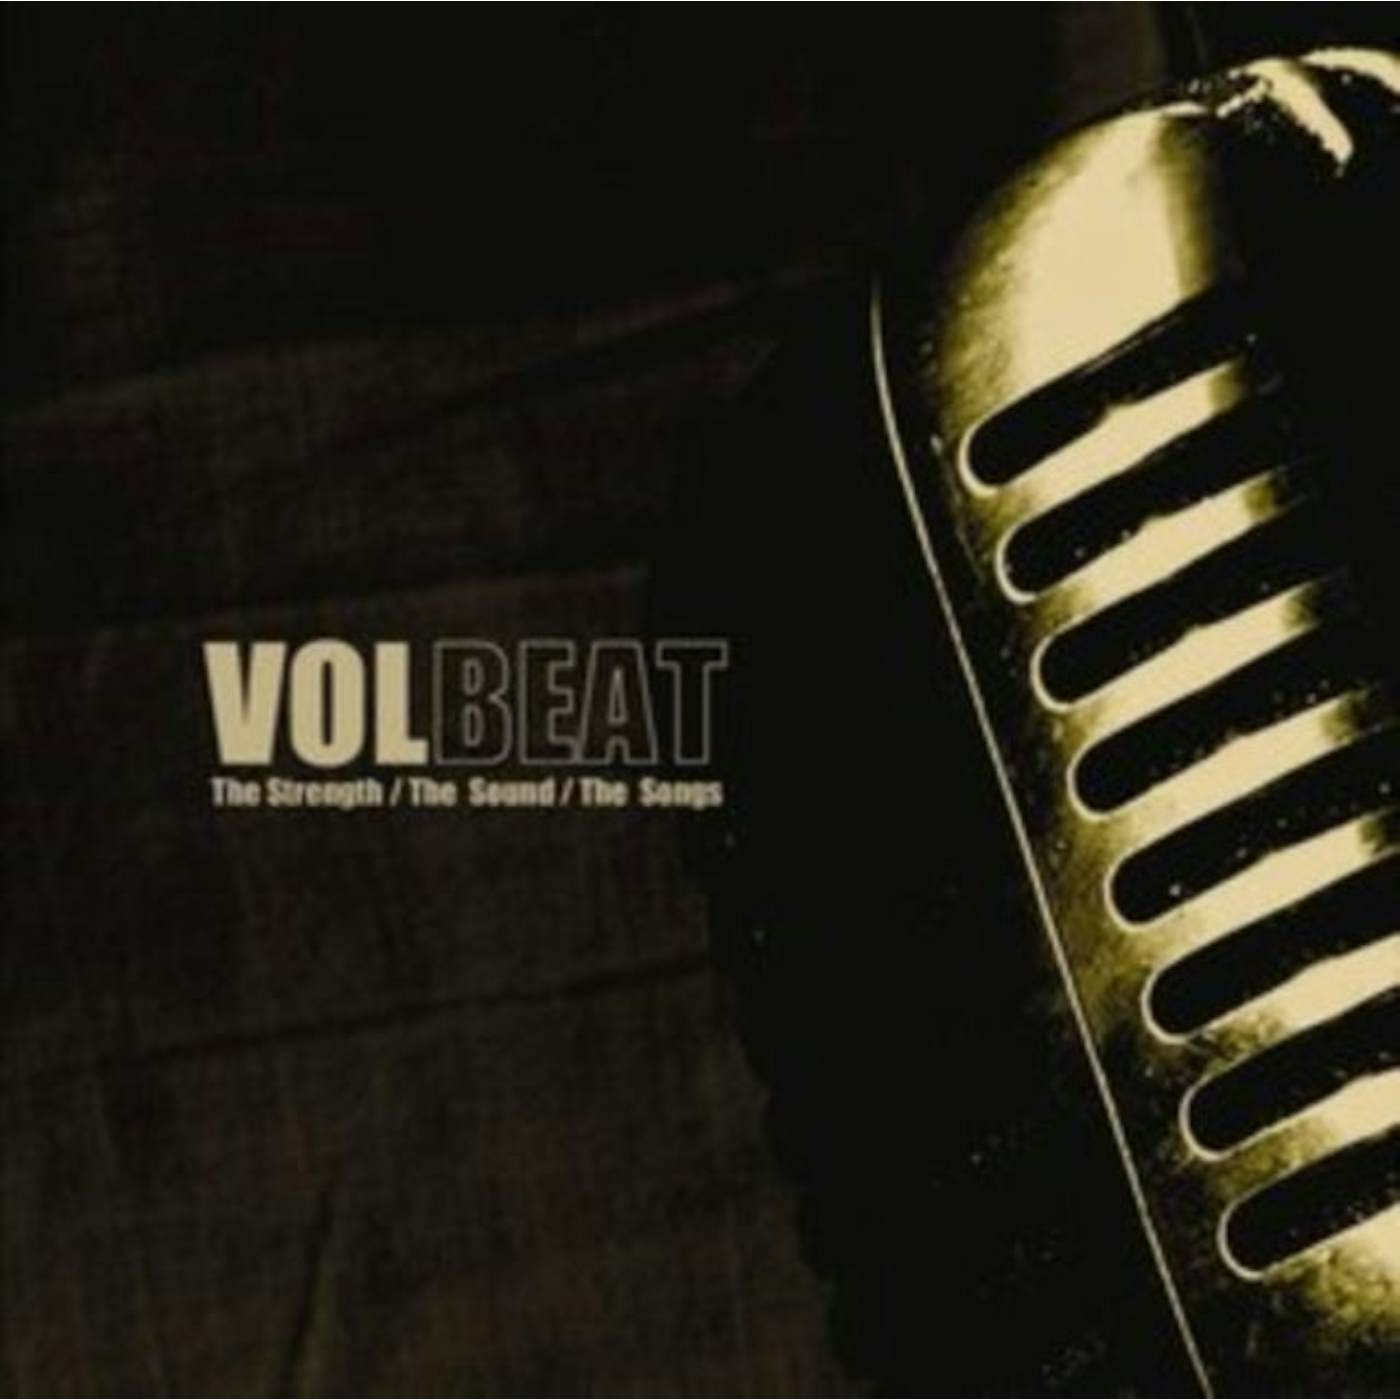 Volbeat LP Vinyl Record - The Strength / The Sound / The Songs (Glow In The Dark Vinyl)